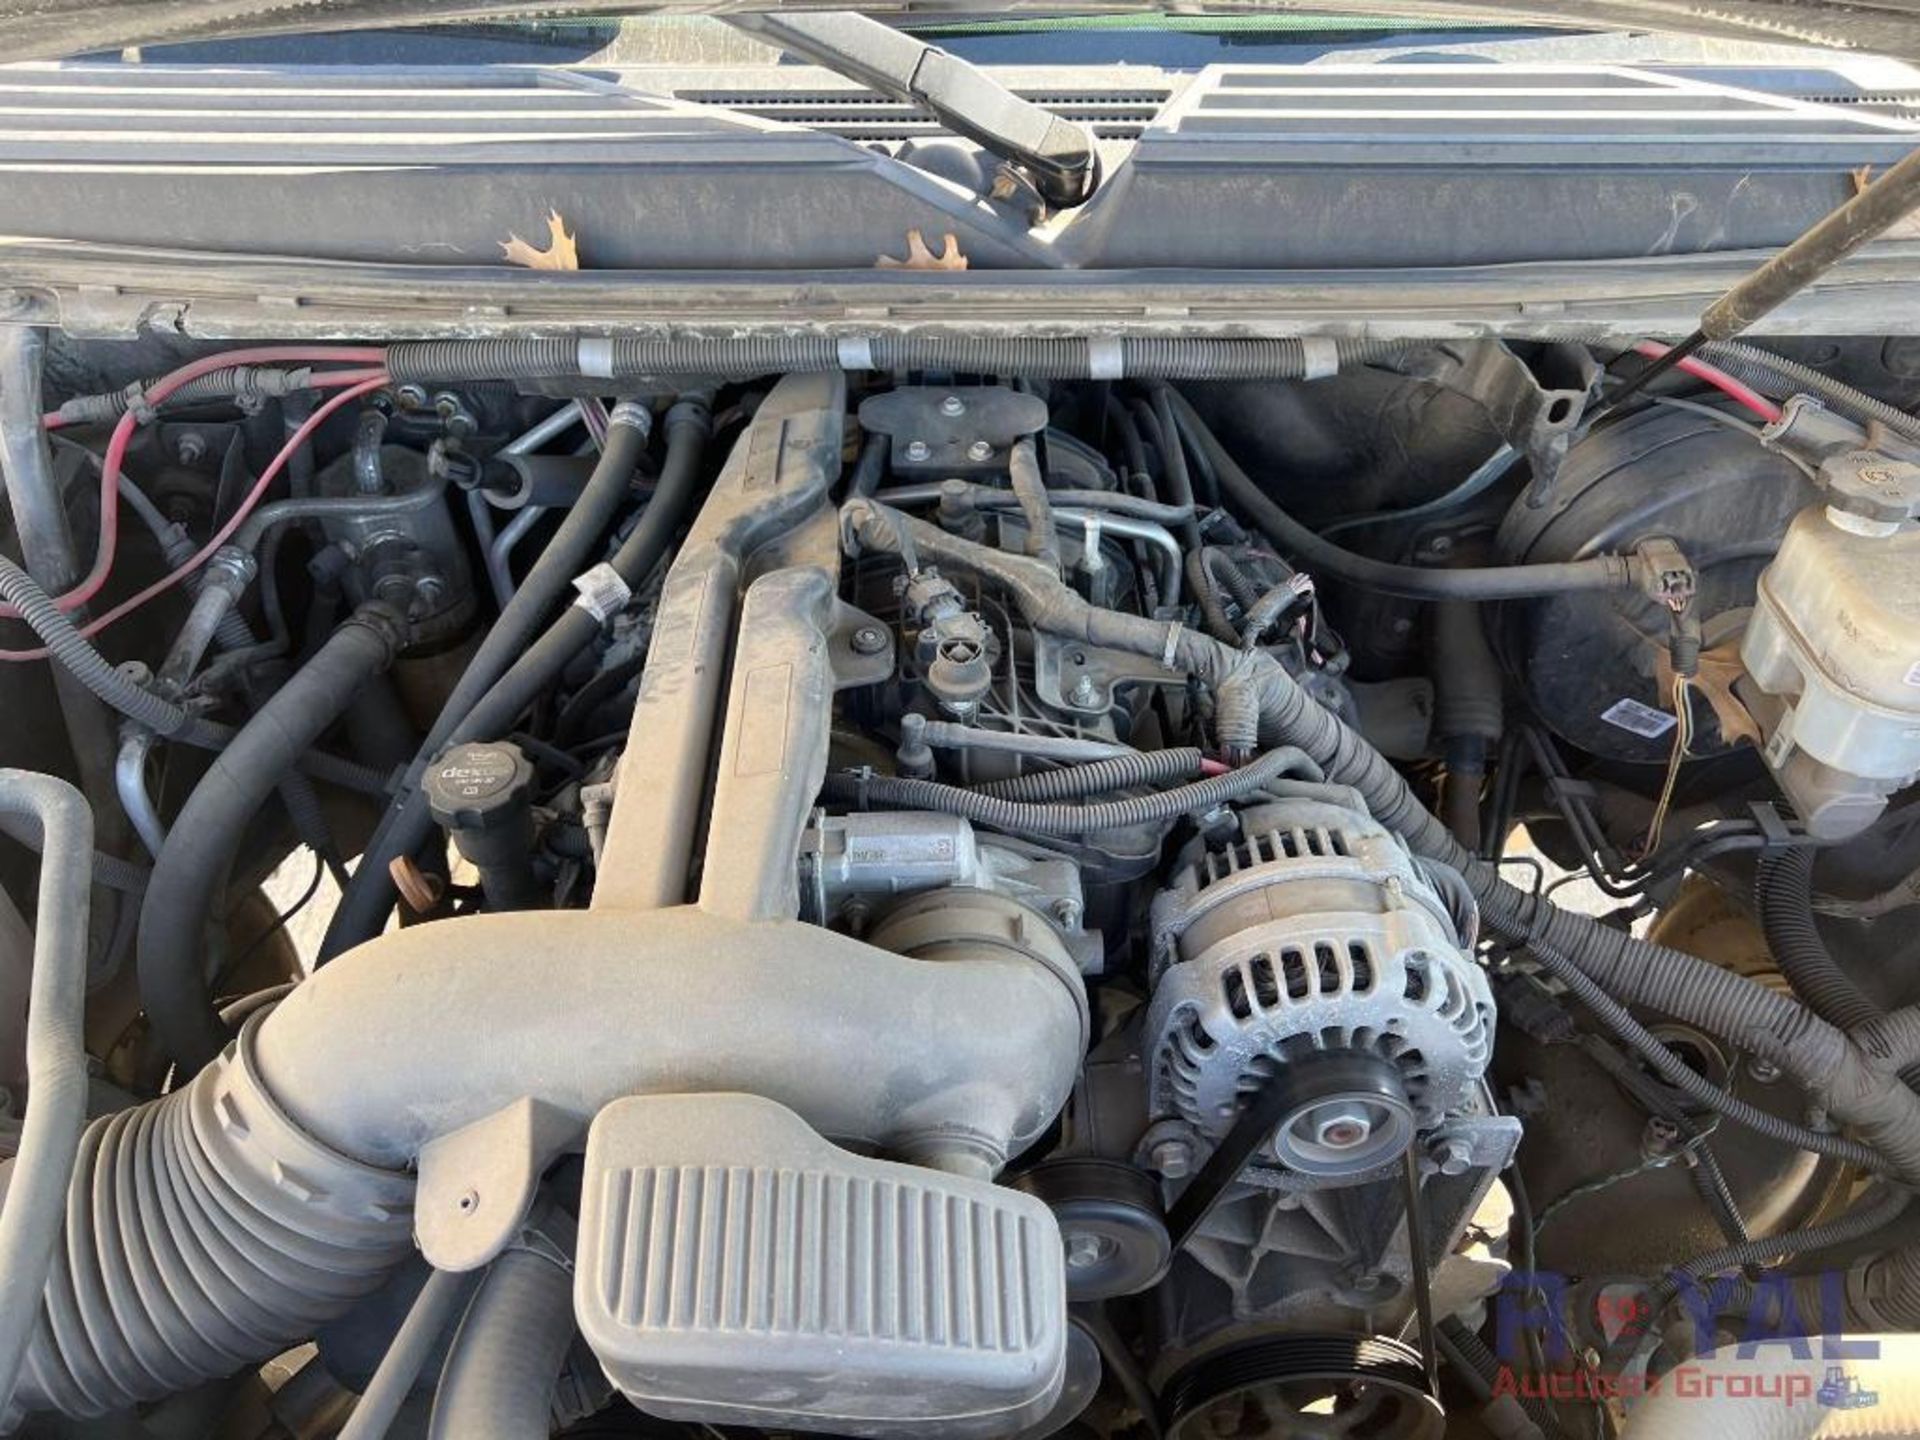 2012 Chevrolet Tahoe SUV - Image 11 of 51